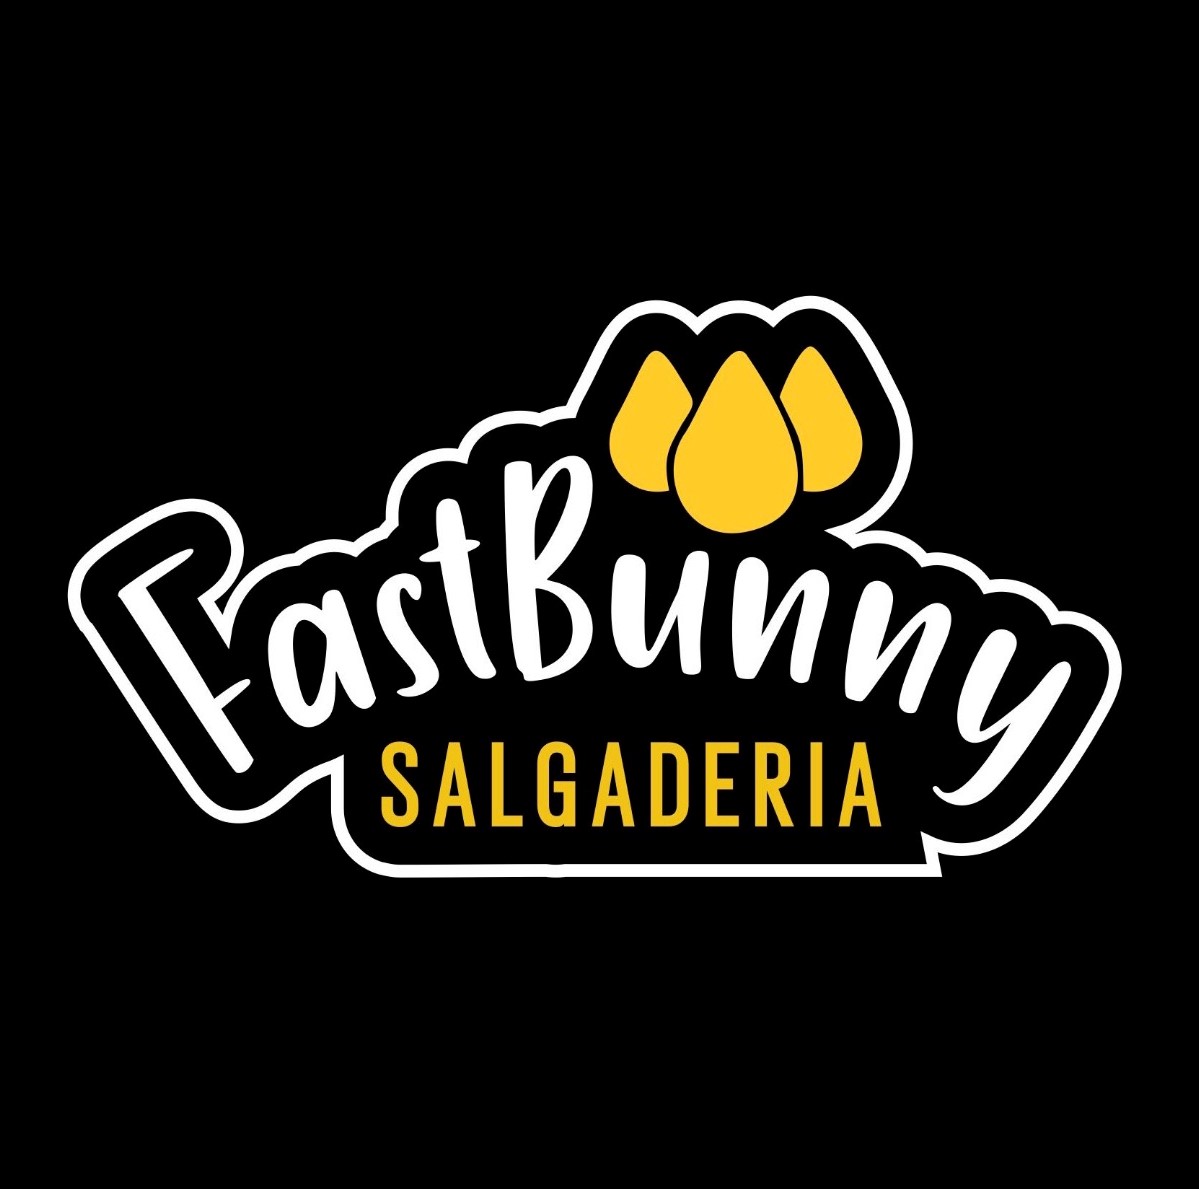 Fast Bunny - Itaim Paulista